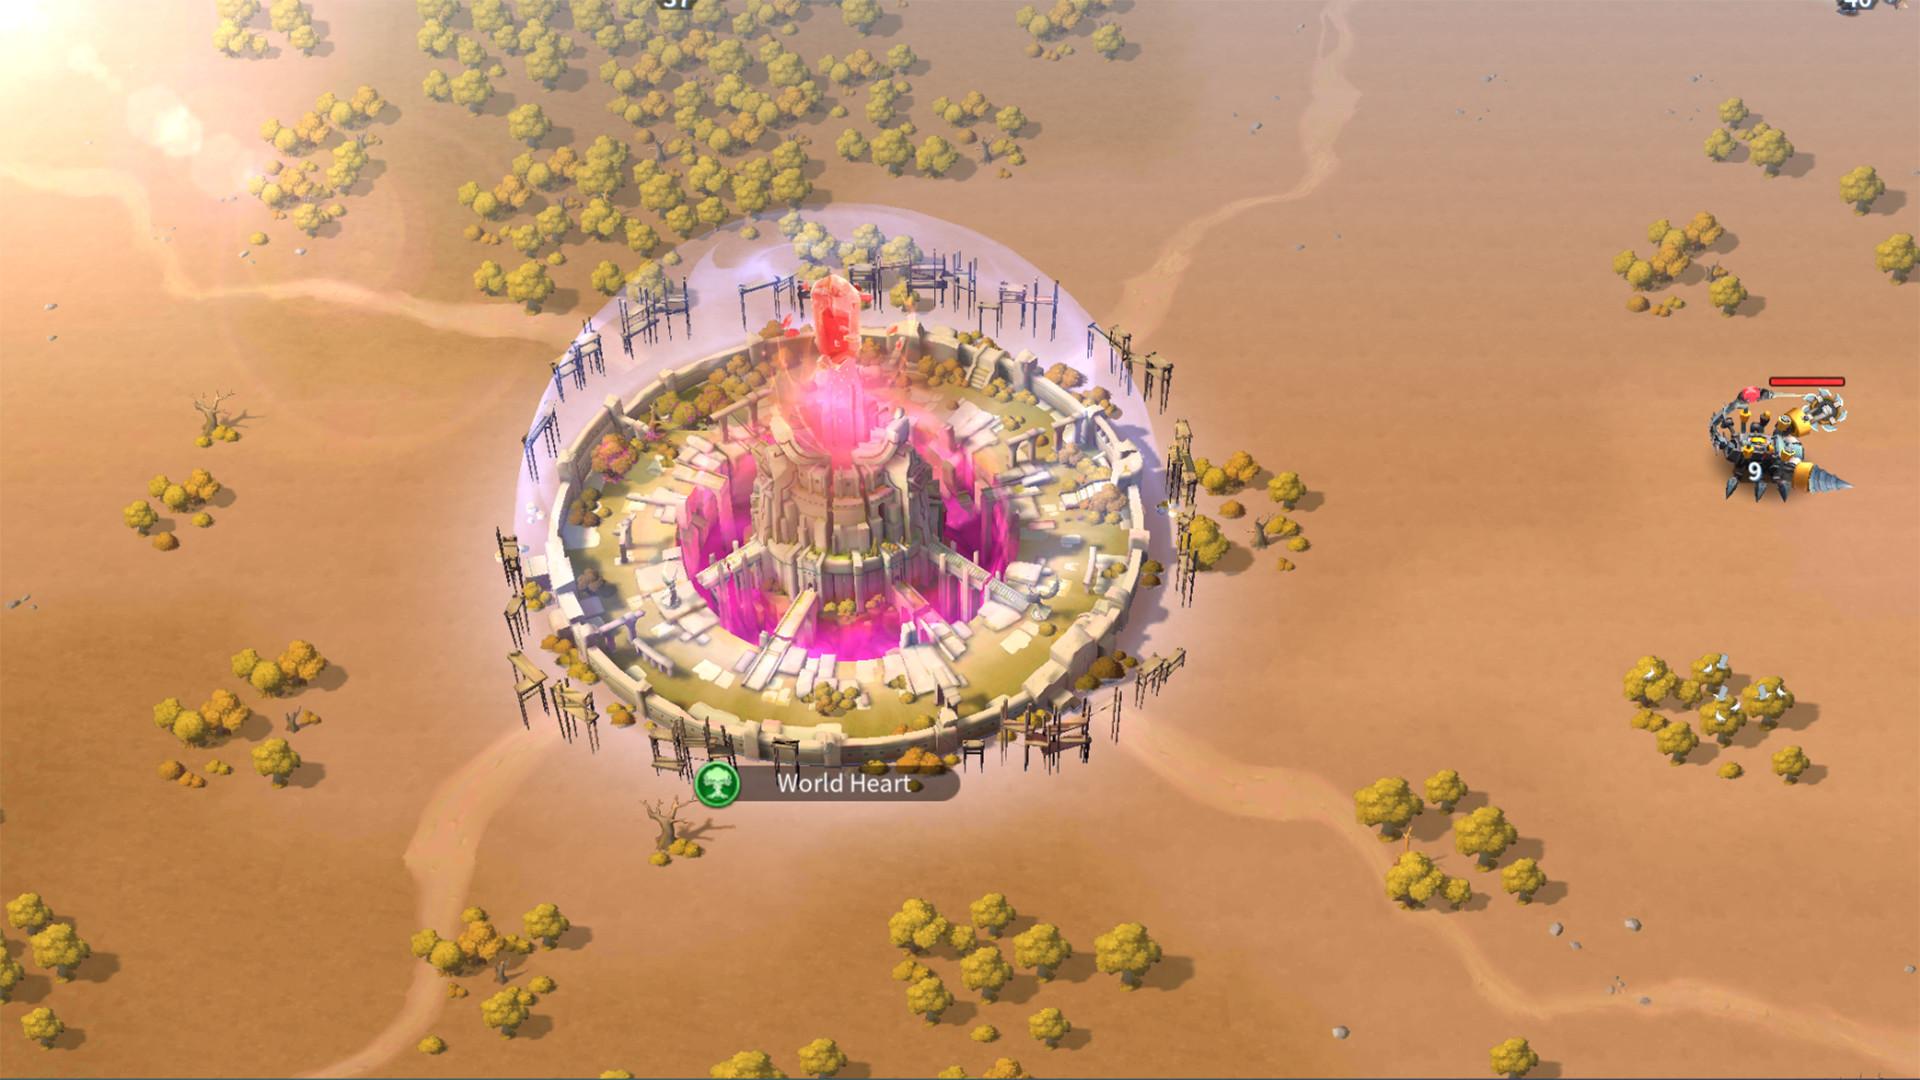 Screenshot №3 from game Infinity Kingdom